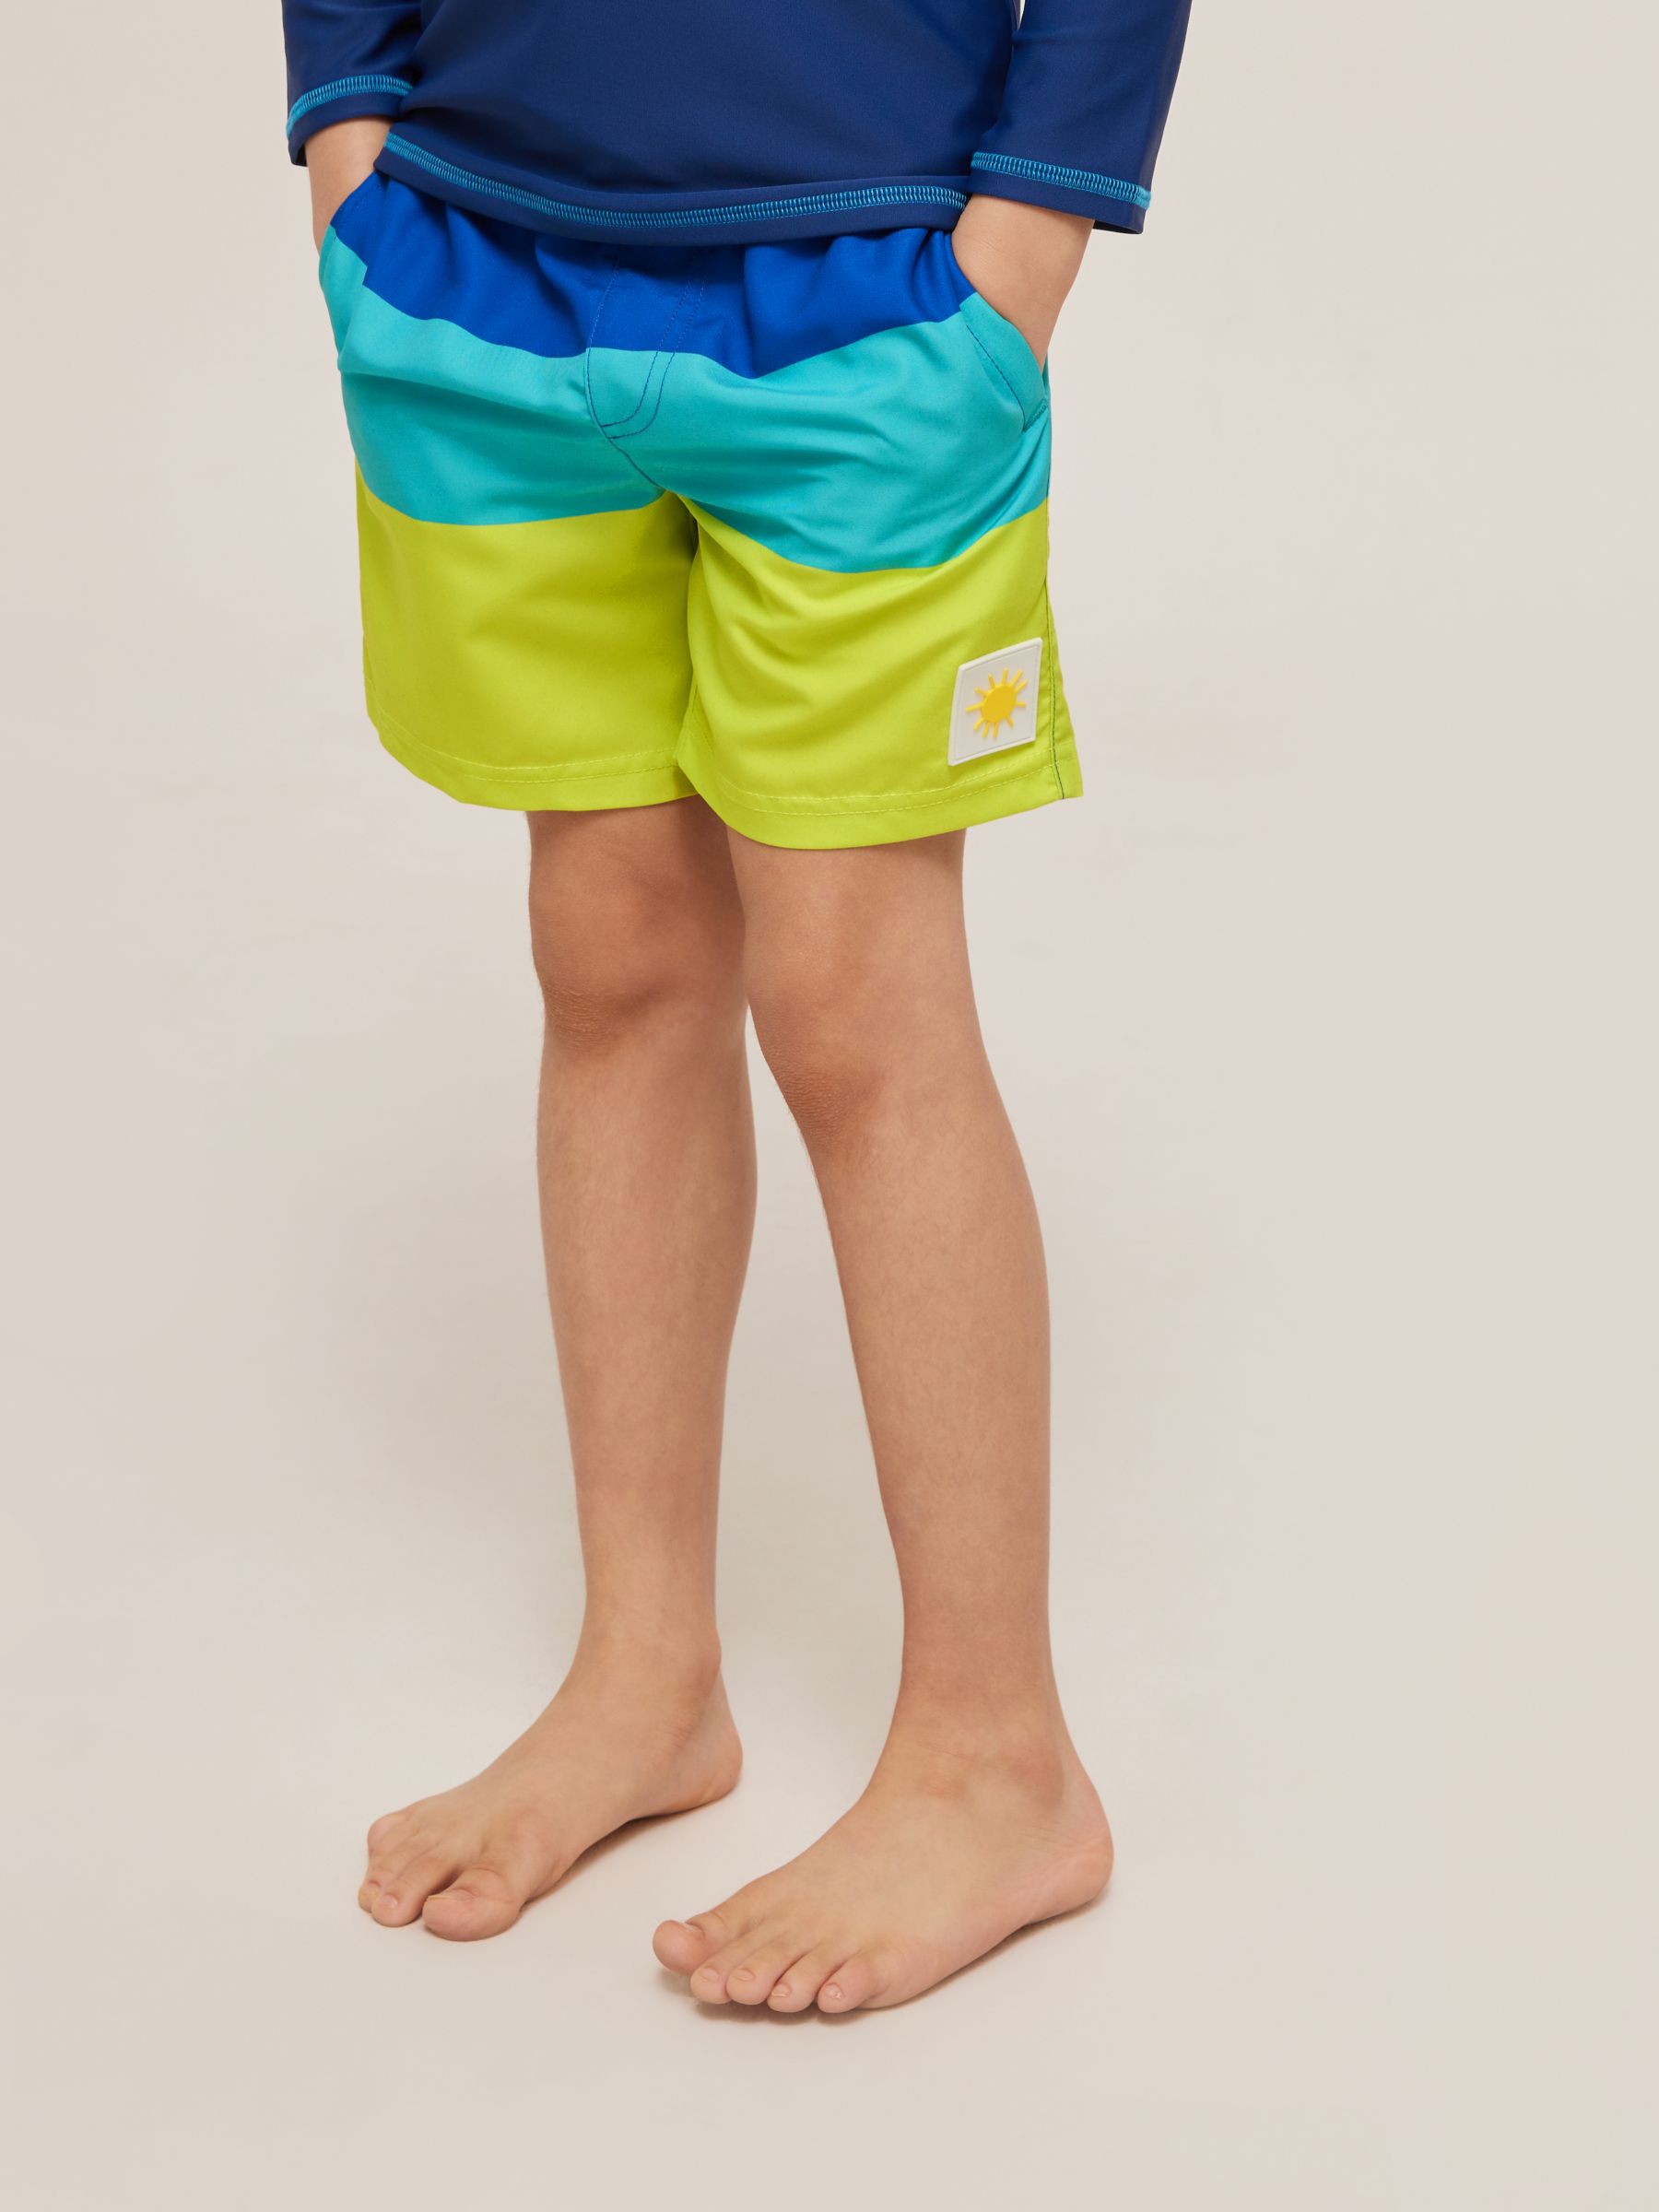 John Lewis John Lewis Boys Age 6 Let's Go Surf Print Blue Swimwear Top T-Shirt 